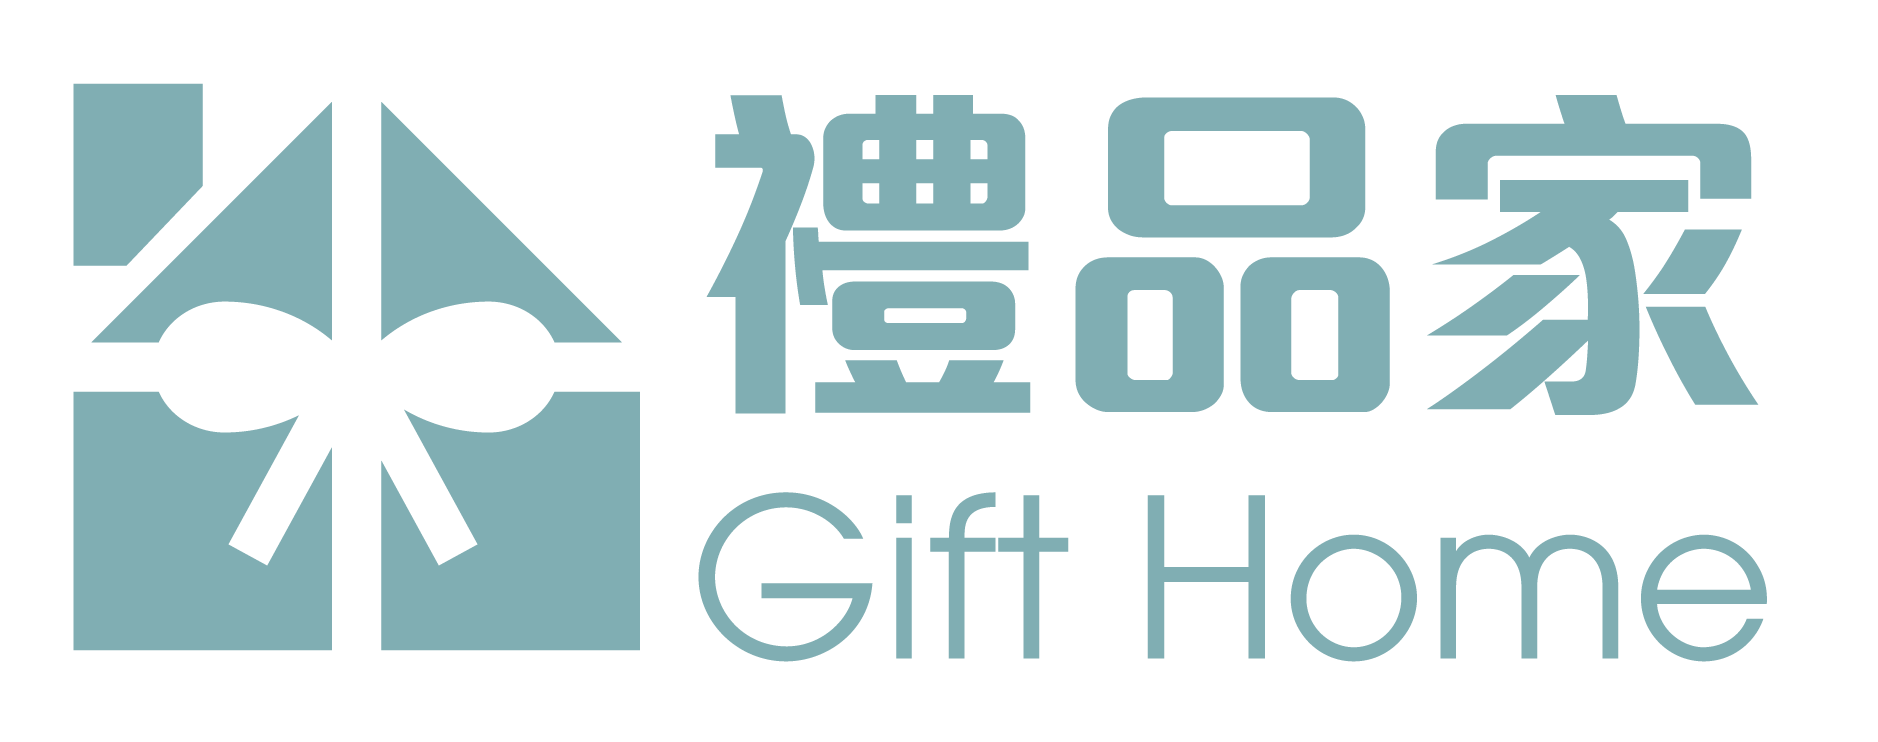 gift-home-logo-01512154